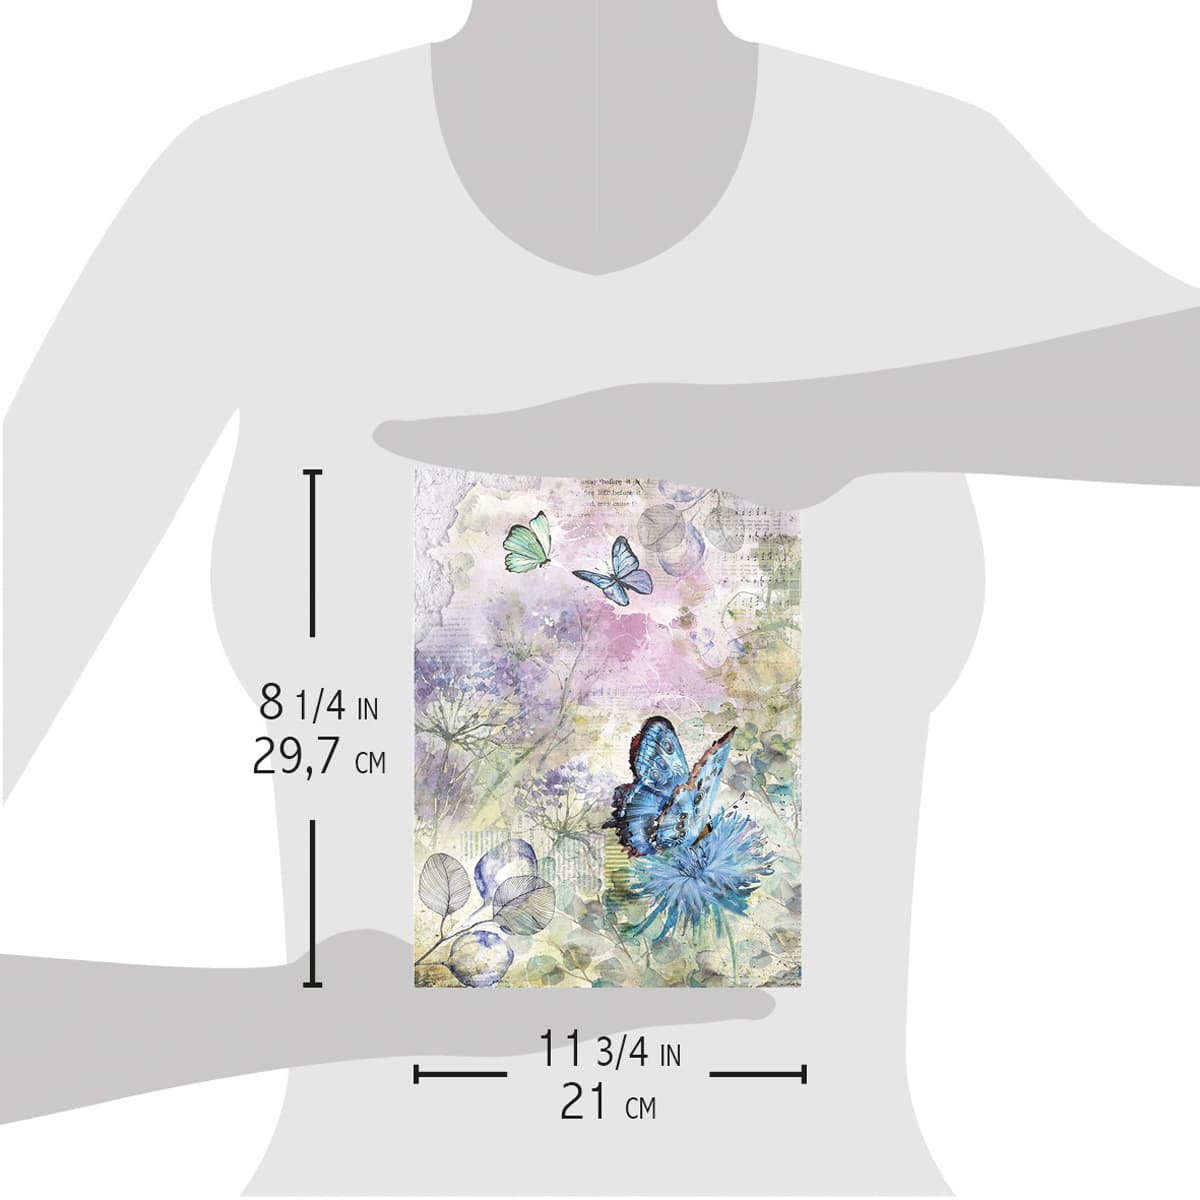 Декупажна хартия Piuma A4 - Синя пеперуда - CBRP121